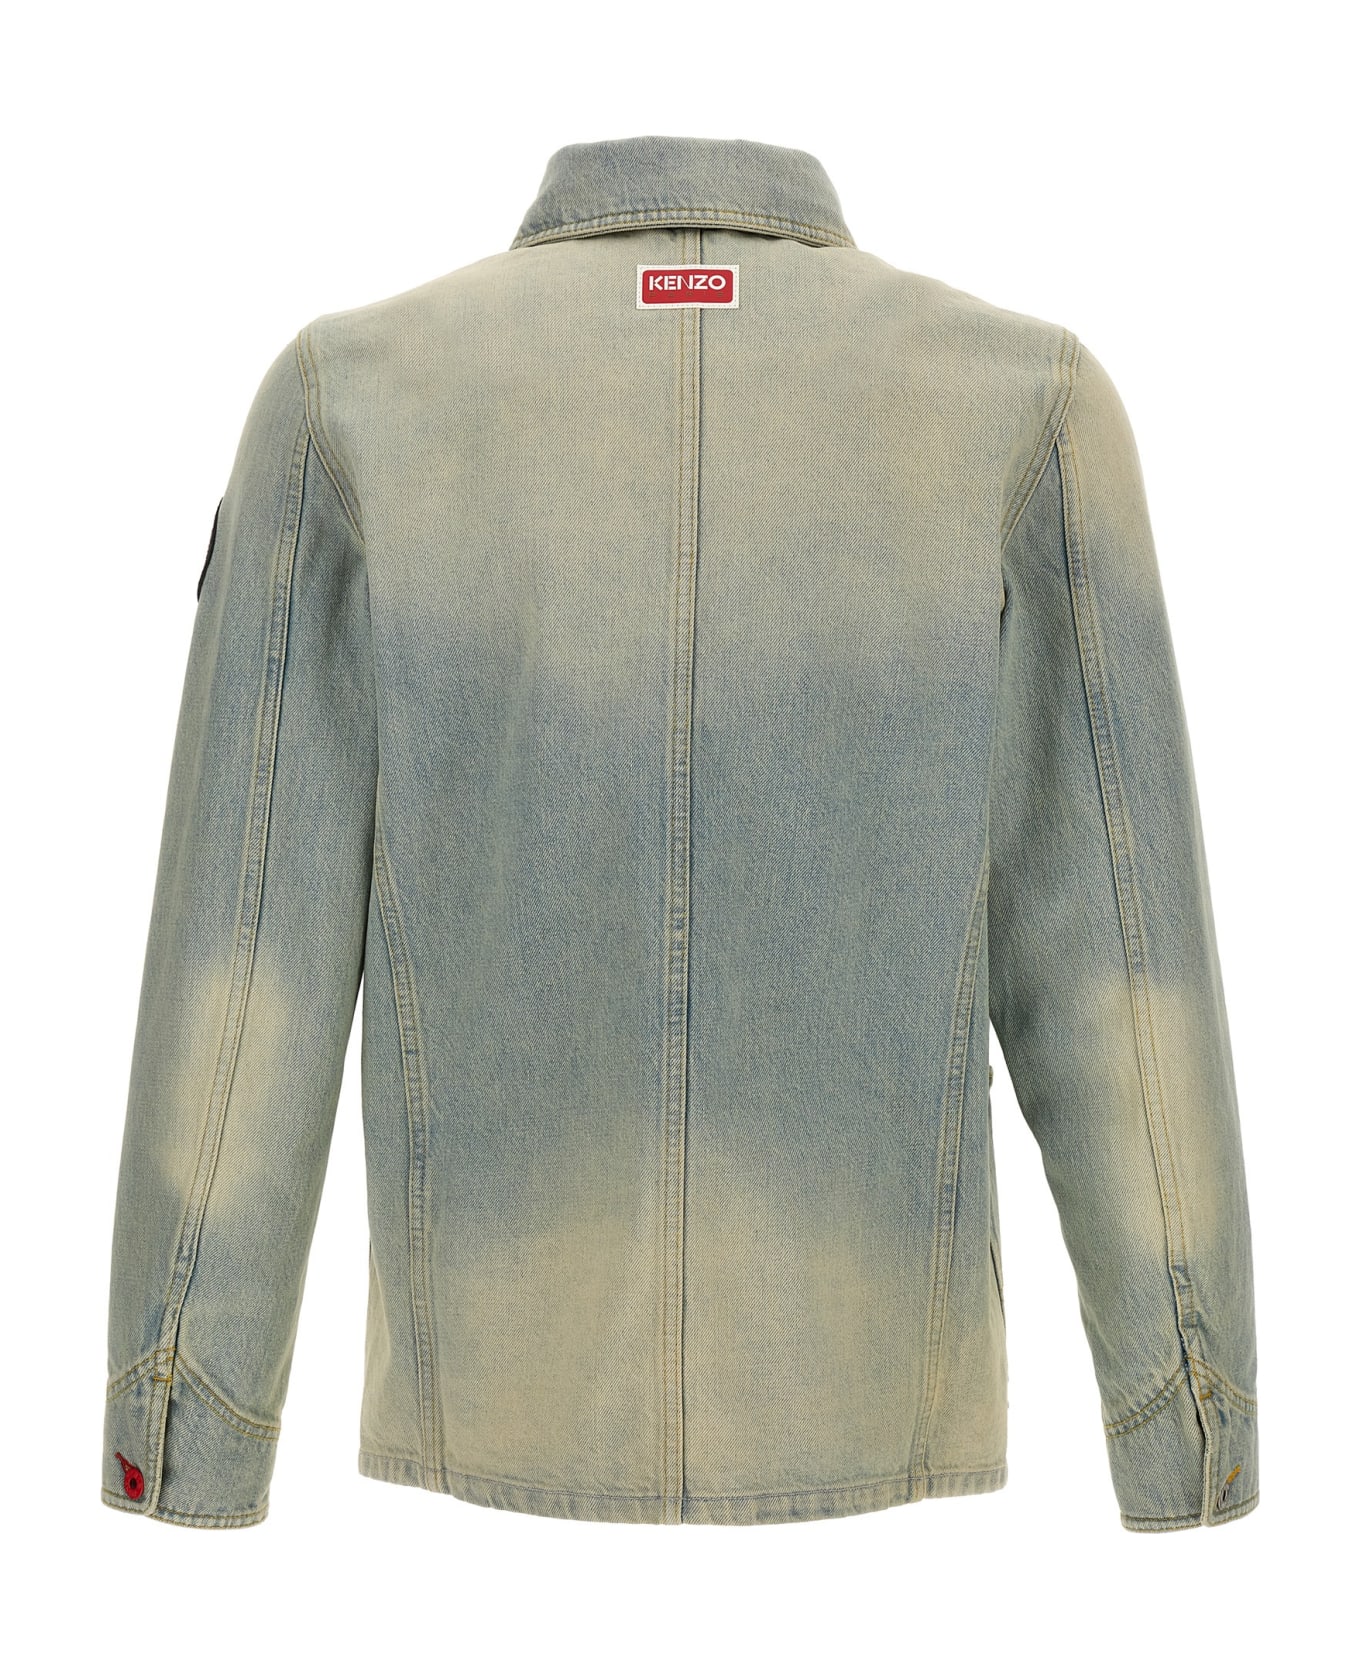 Kenzo Workwear Denim Jacket - Light Blue ジャケット